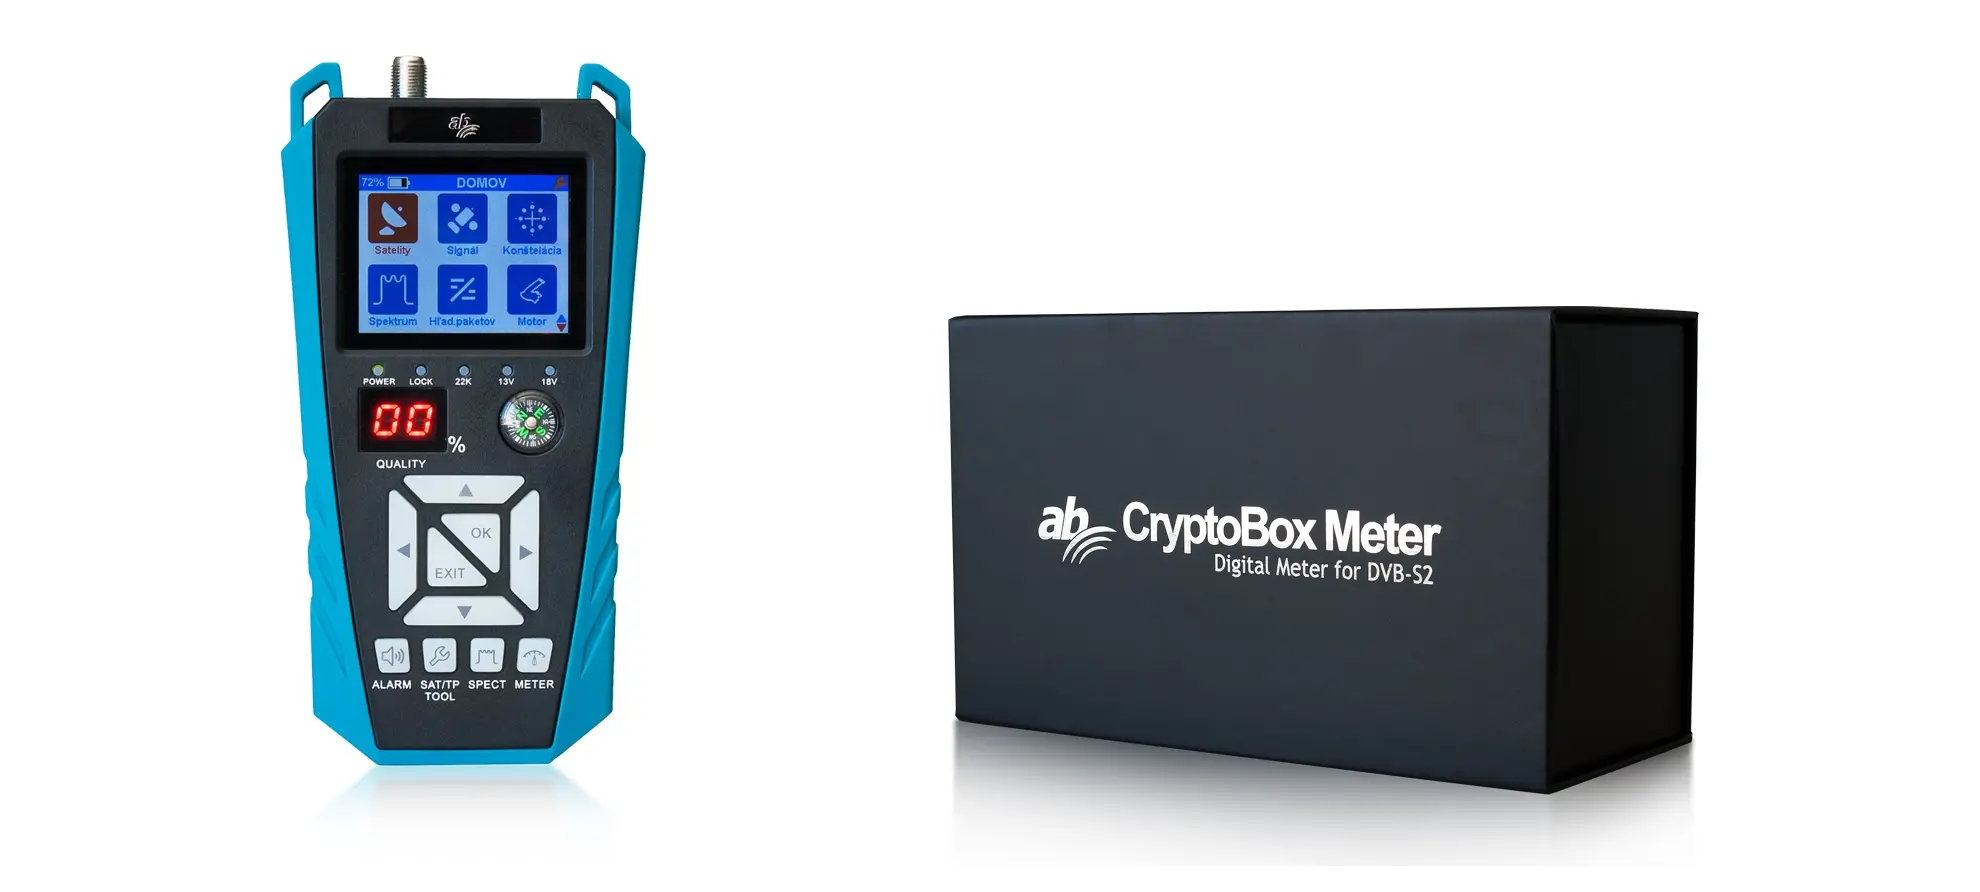 AB CryptoBox Meter DVB-S2